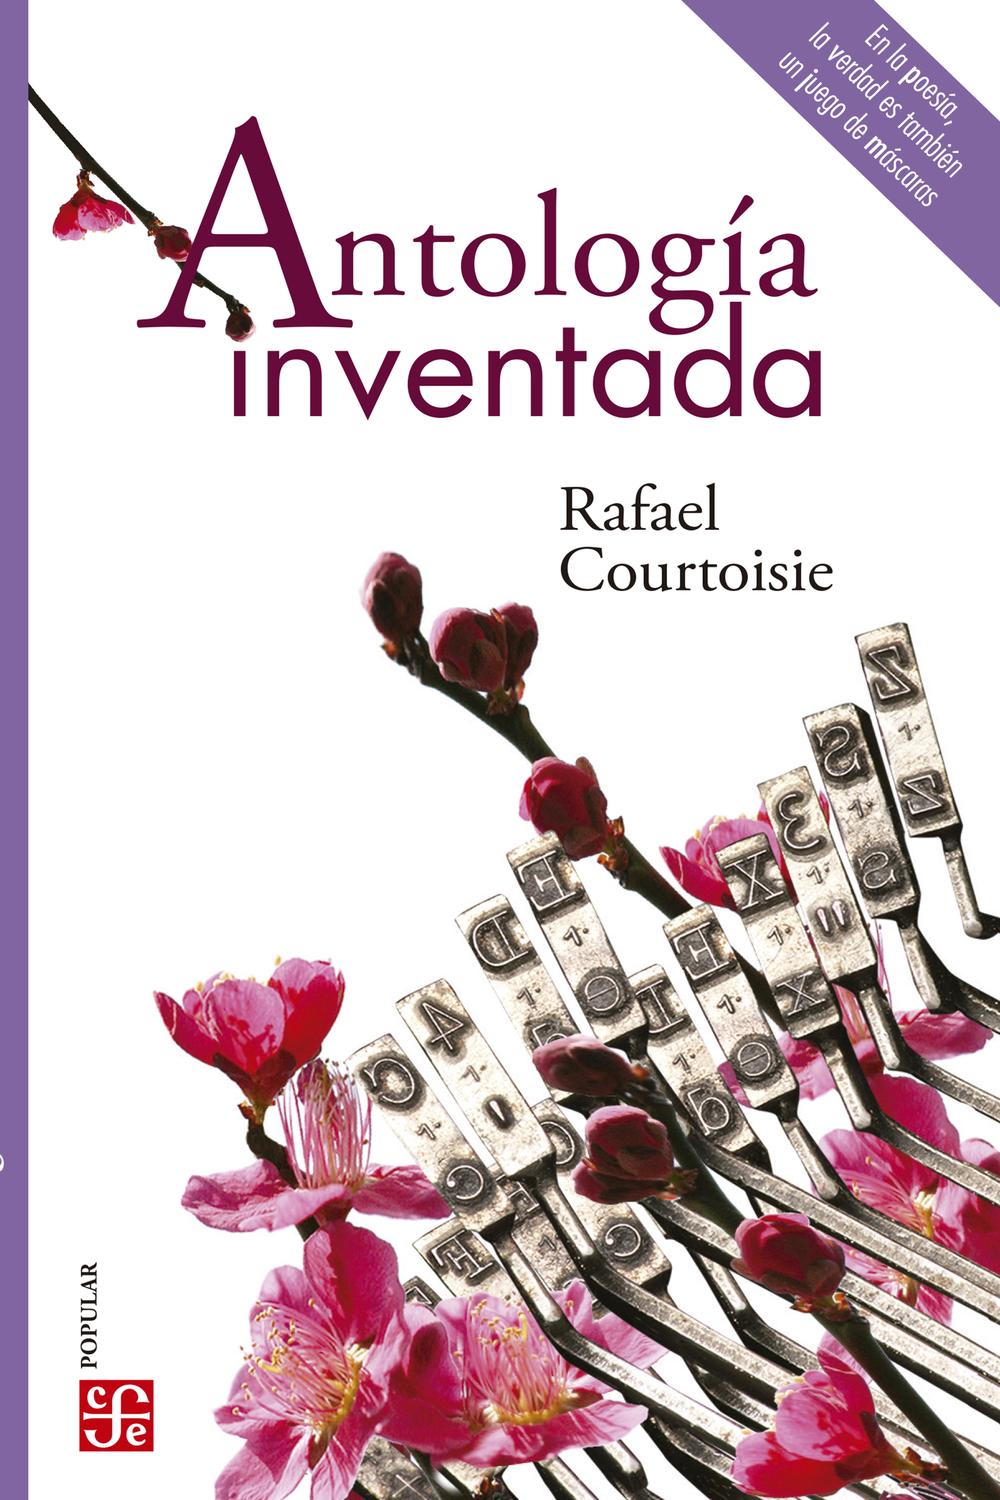 Antología inventada - Rafael Courtoisie